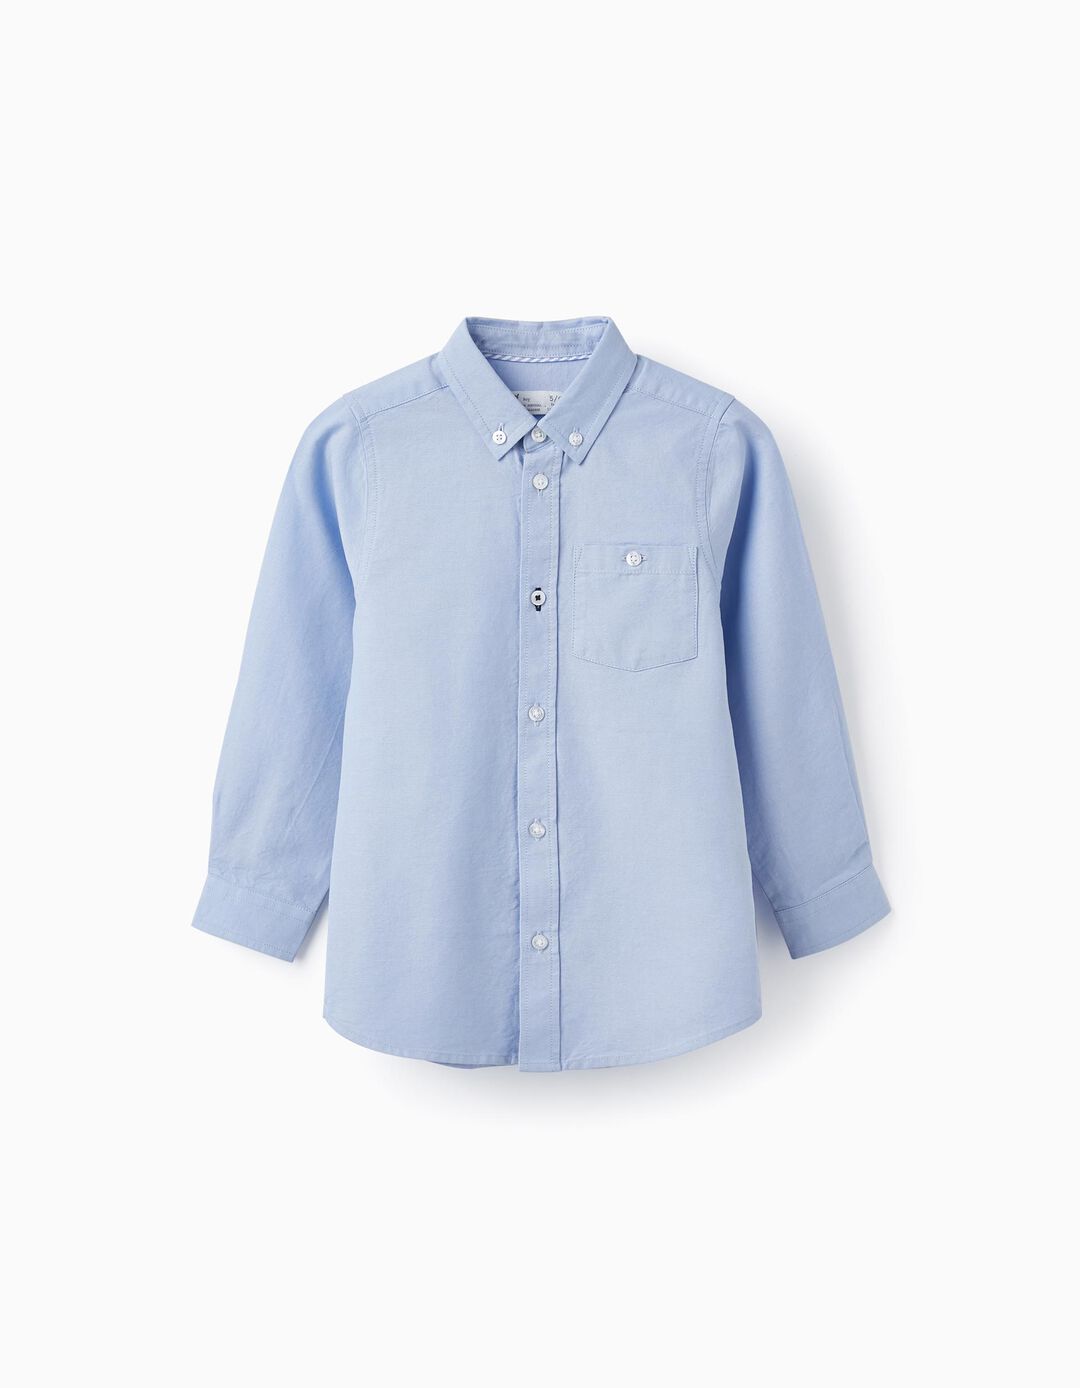 Long Sleeve Cotton Shirt for Boys, Blue